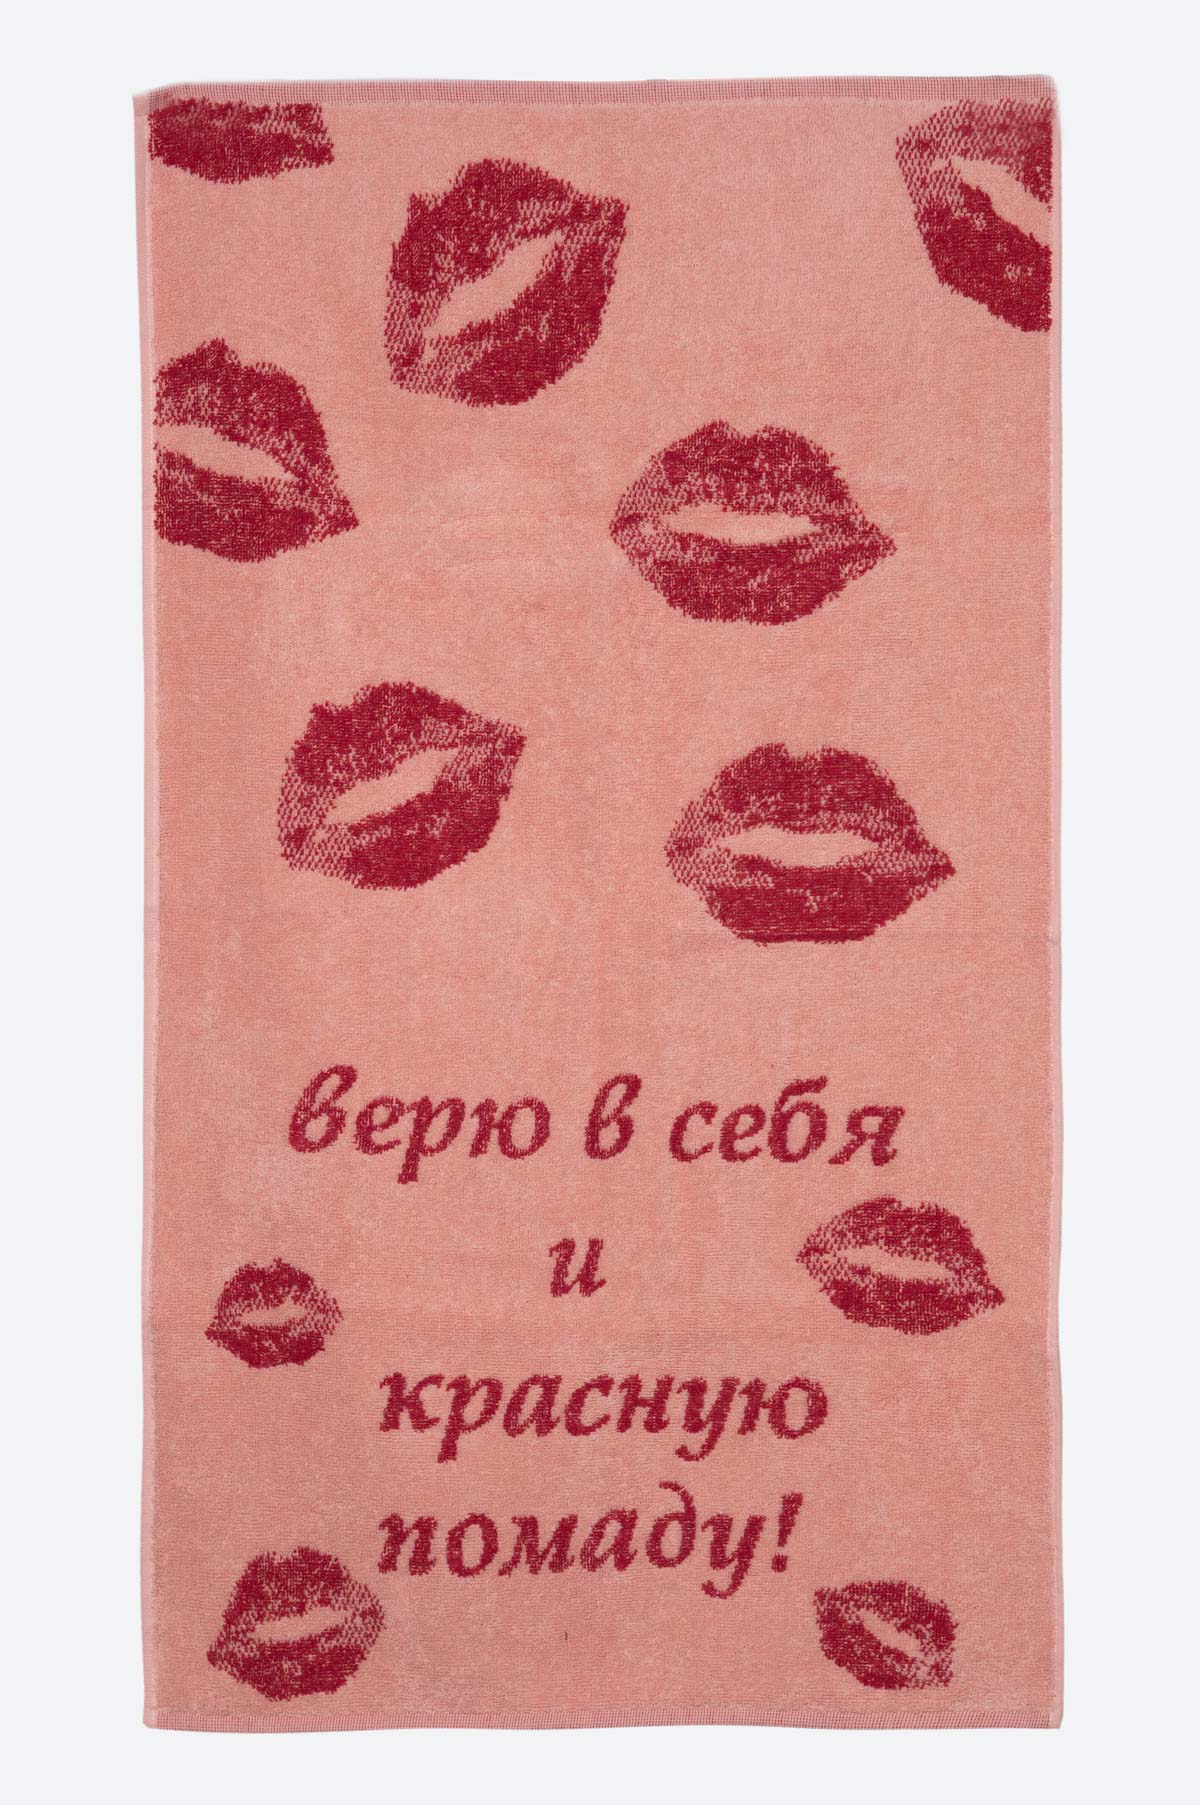 Полотенце махровое 50*90 ПЛ-2602-05447  х/б с-1 цв.10000 Red lipstick Текстиль Центр 